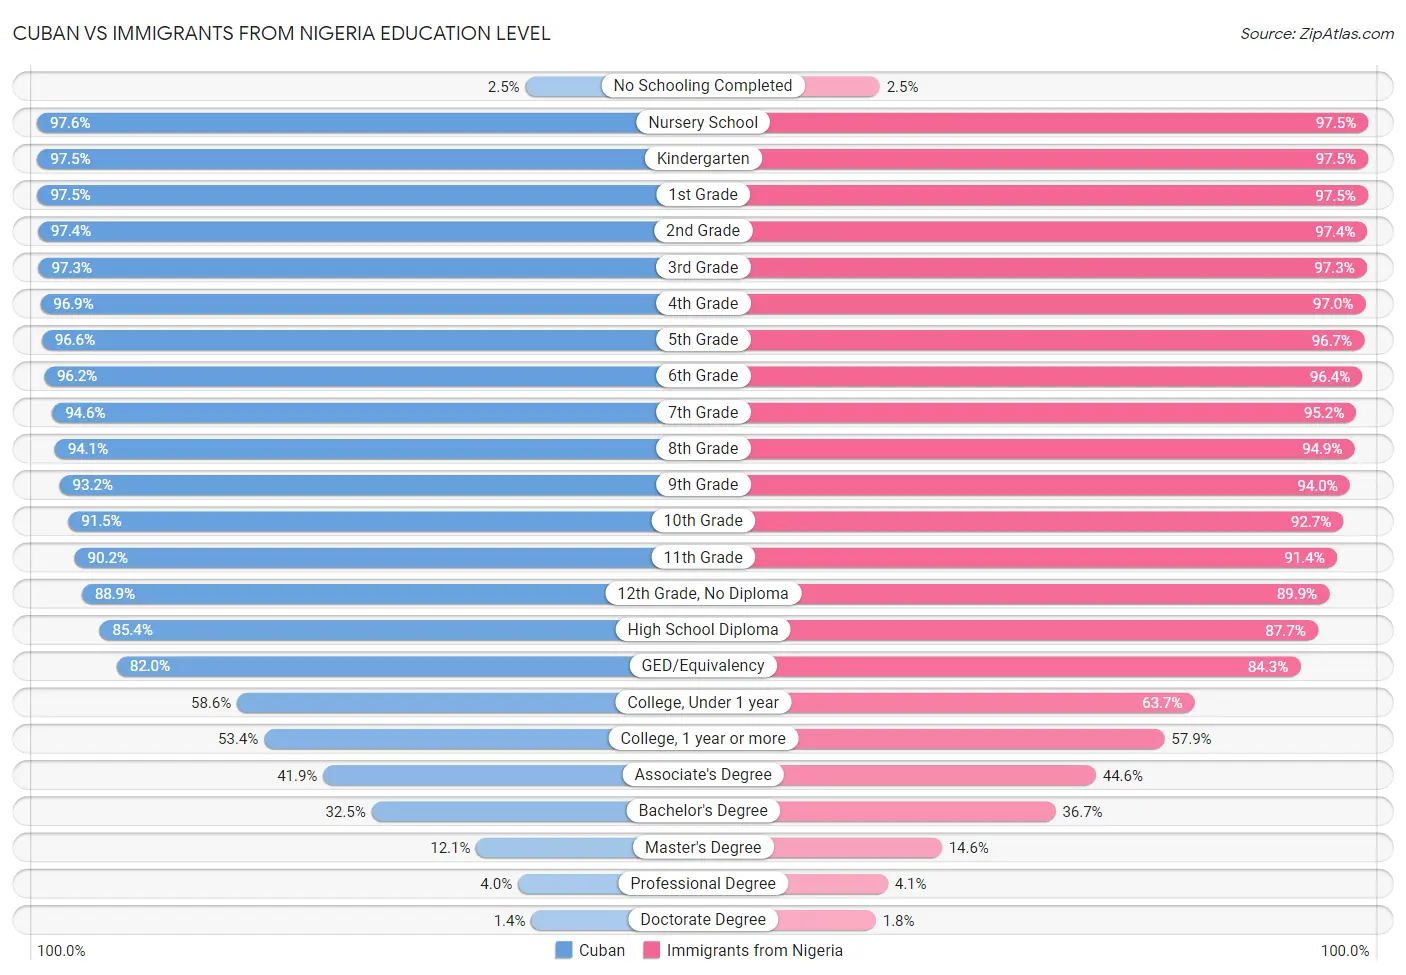 Cuban vs Immigrants from Nigeria Education Level